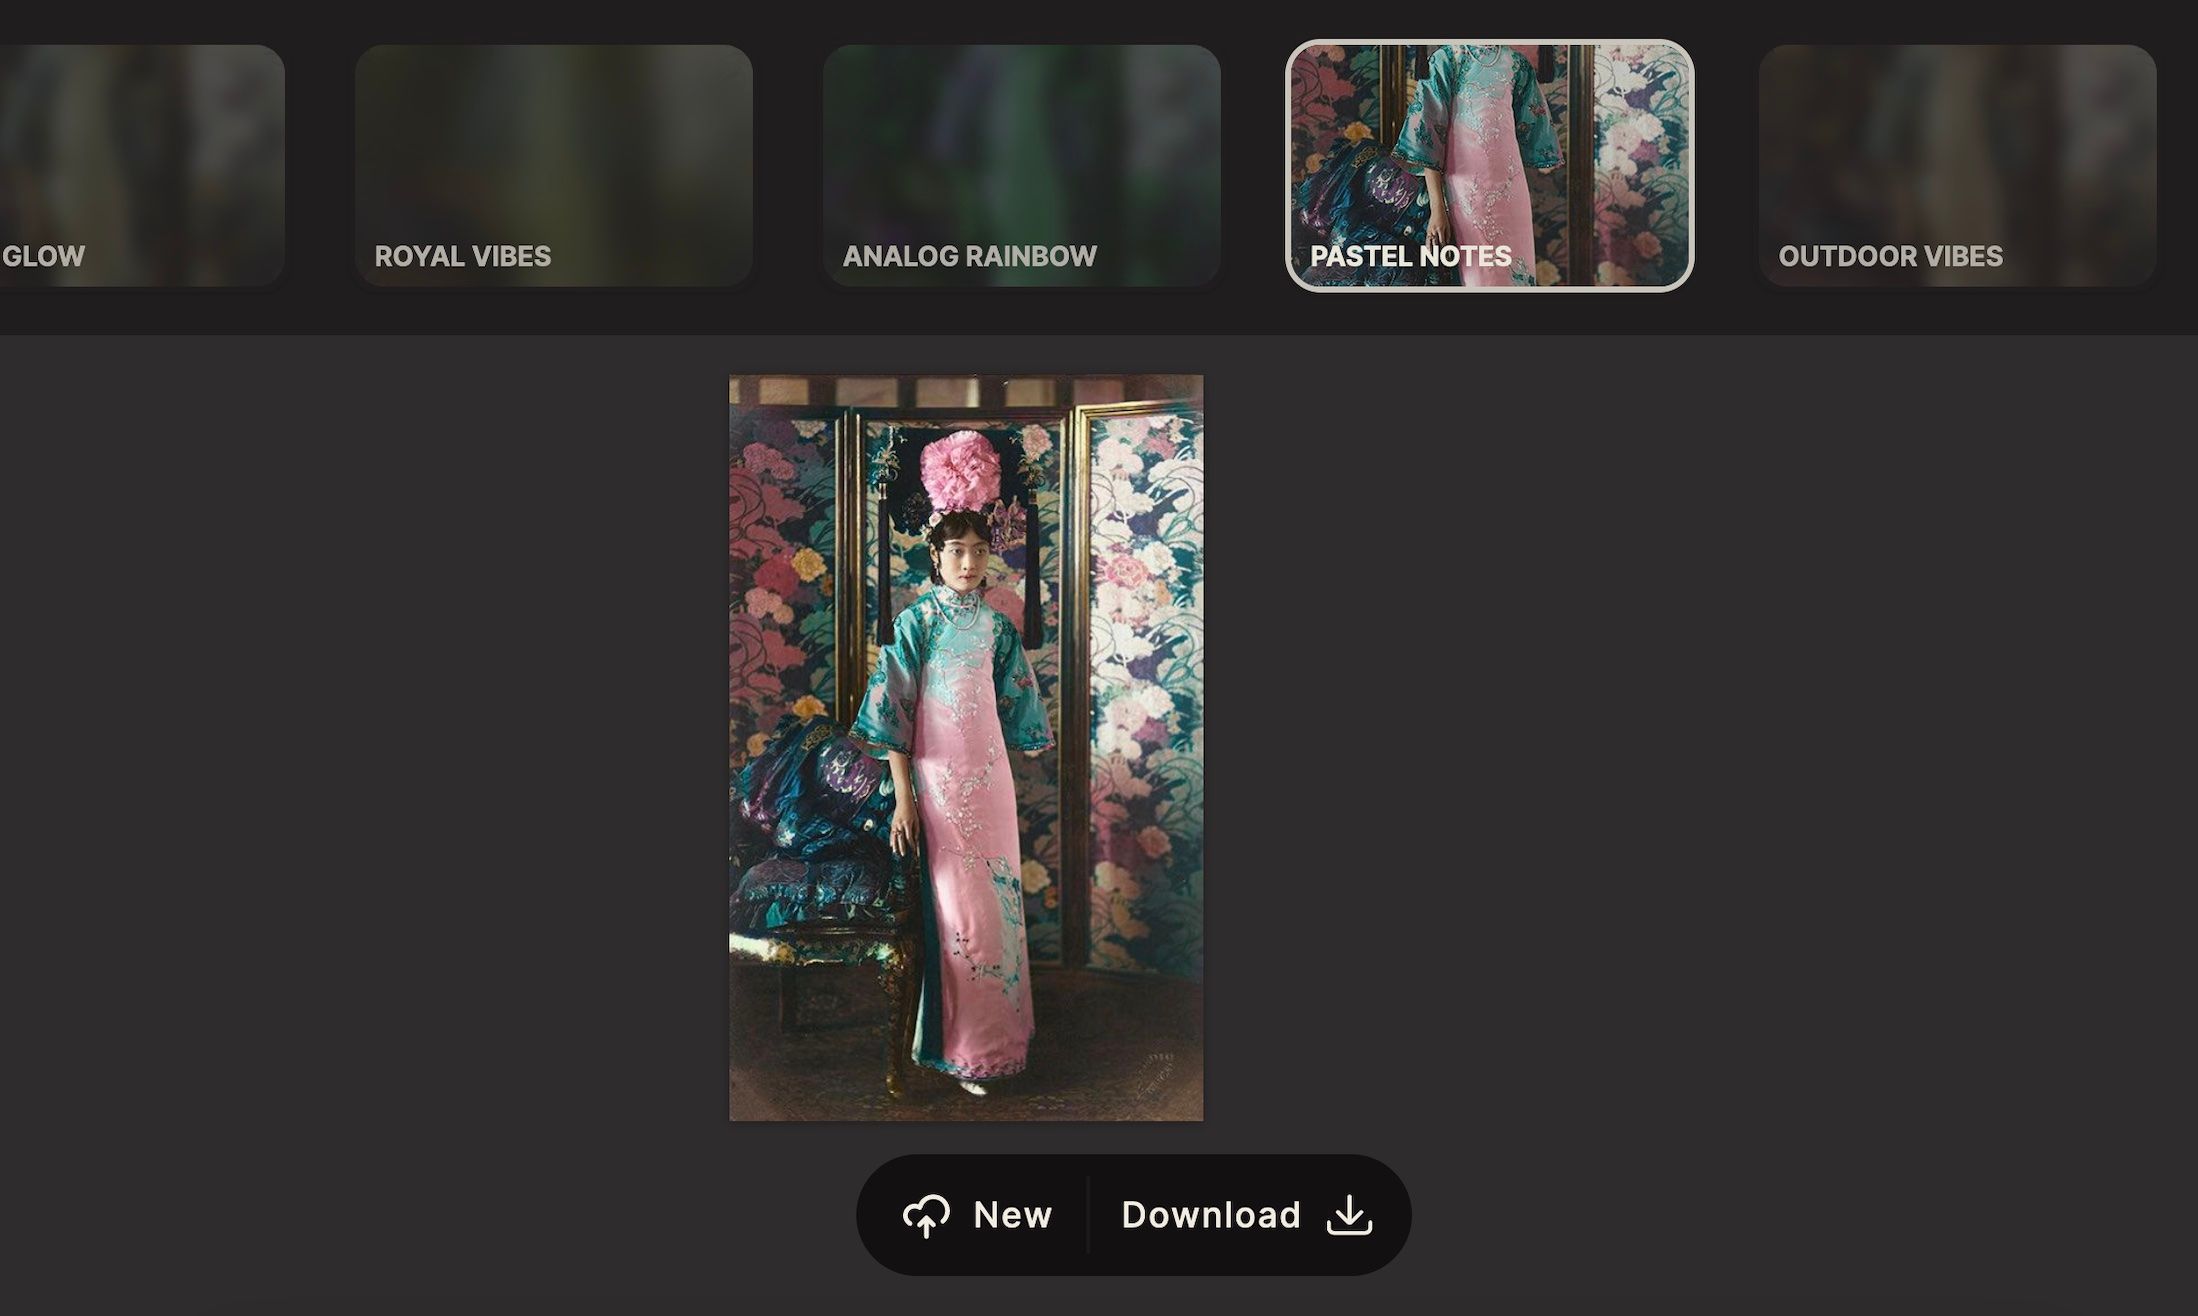 Palette.fm 上的 Pastel Notes 颜色配置文件适用于穿裙子的女性图像。